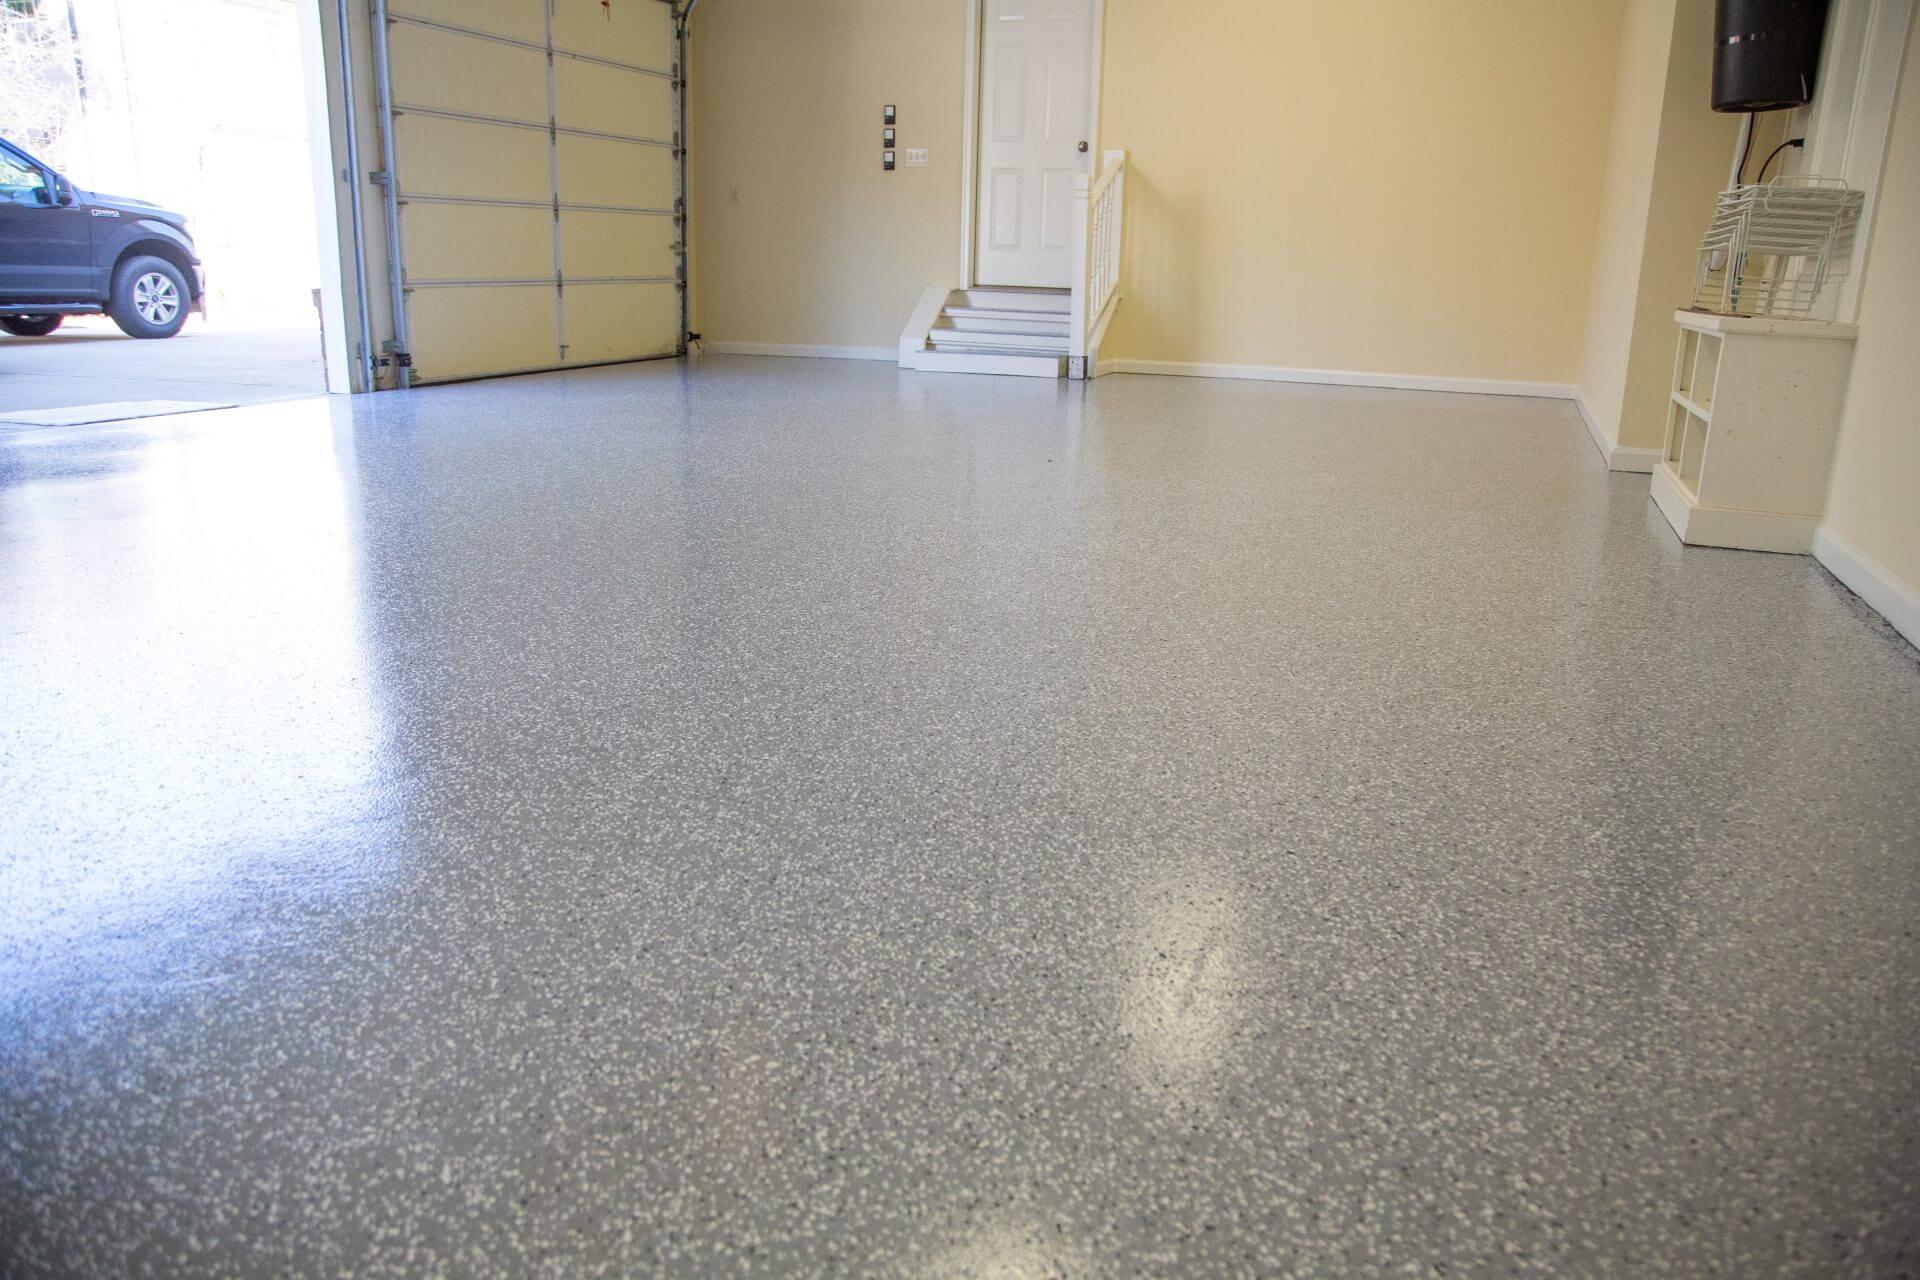 Epoxy Garage Floor - Professional_Surface_Restoration_Hard_Surface_Cleaning_epoxy_floor_benefits_toledo_ohio